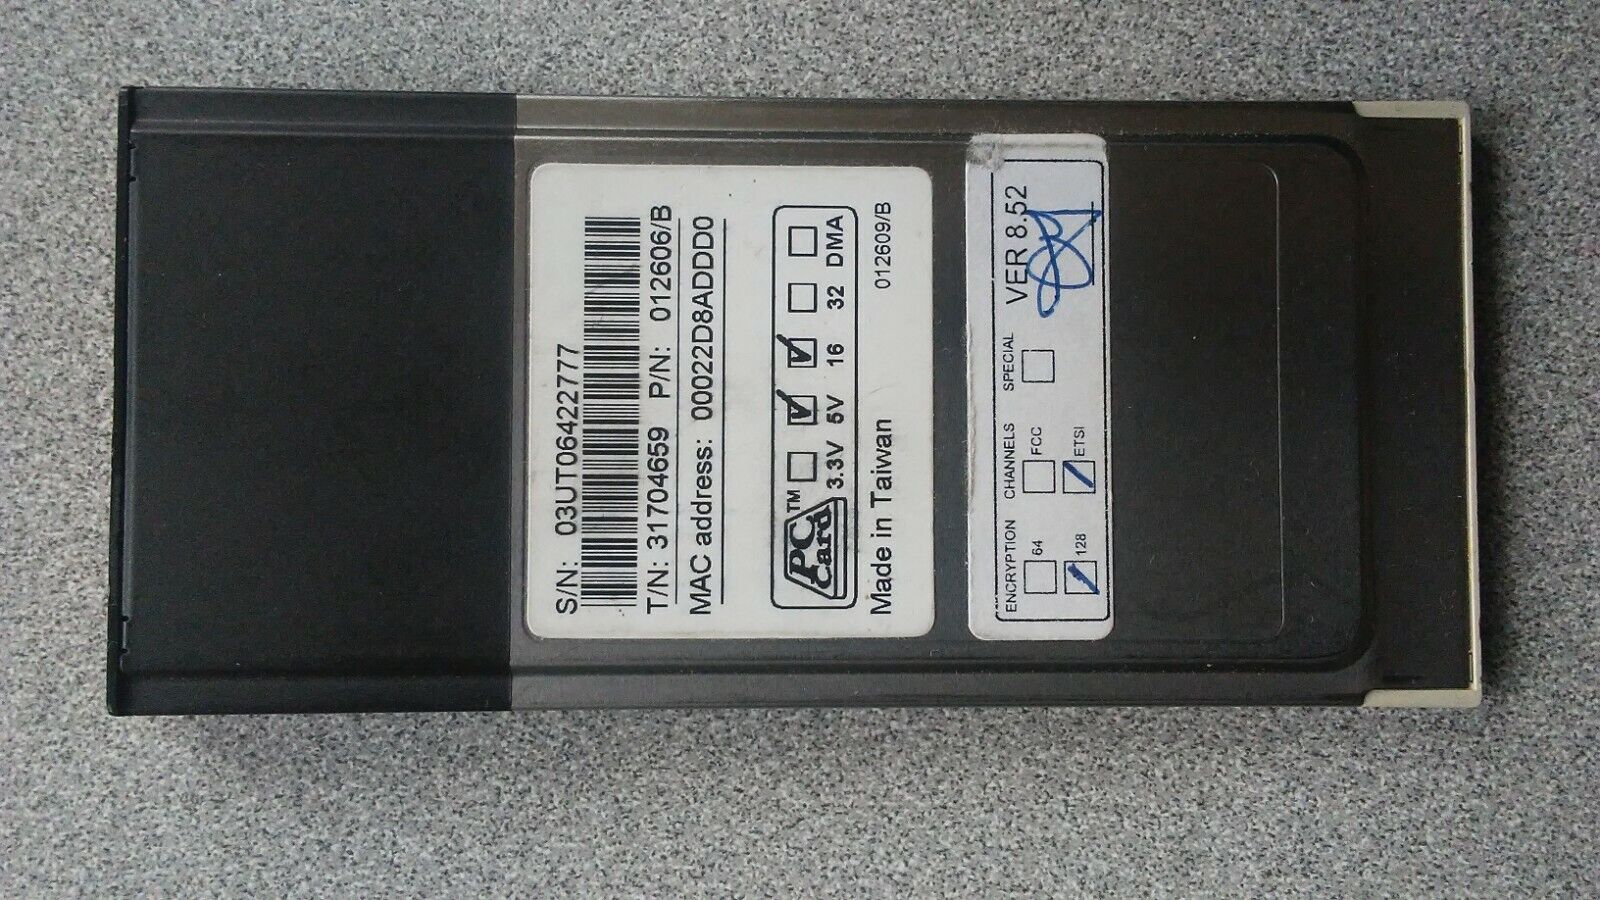 Orinoco Lucent Wavelan 11Mbps PC Gold Card 012606/B PCMCIA ETSI Radio